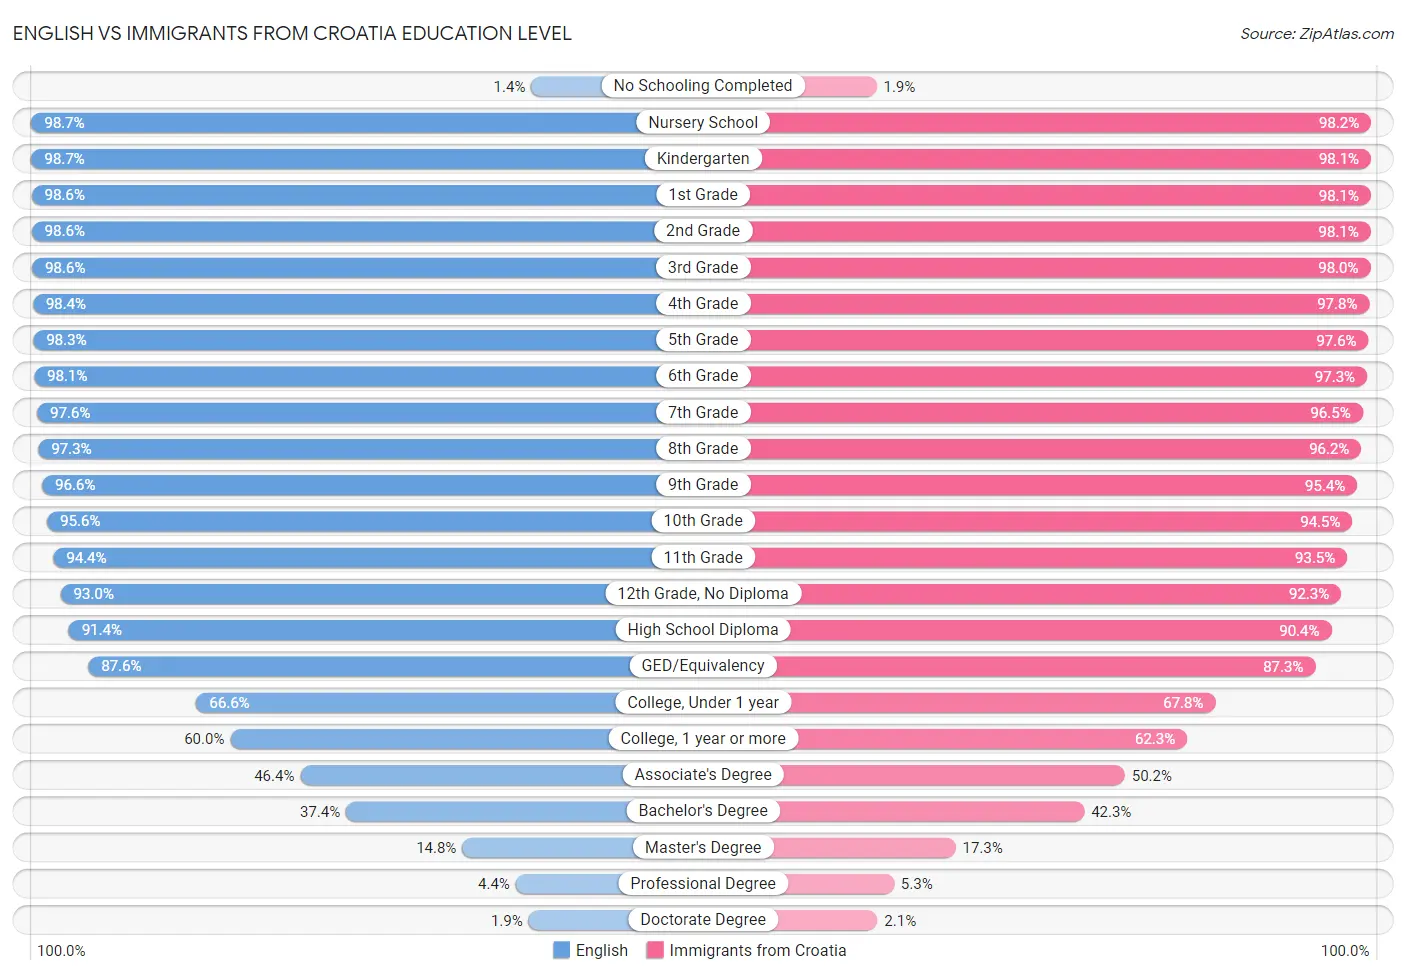 English vs Immigrants from Croatia Education Level